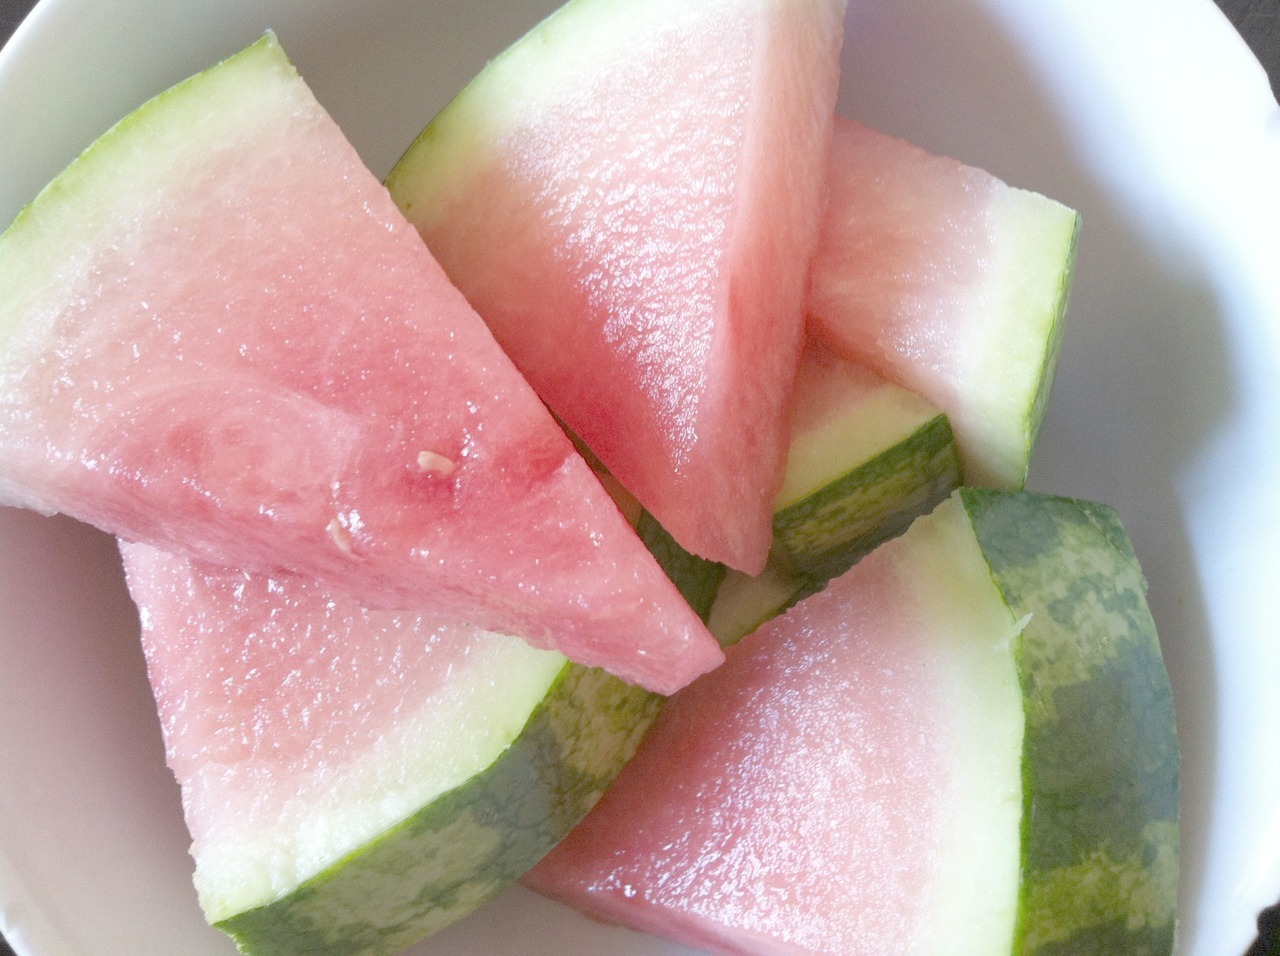 lemonwaters:  und-erwater:  v-anilladaisys:  v-anilladaisys: i don’t like watermelon